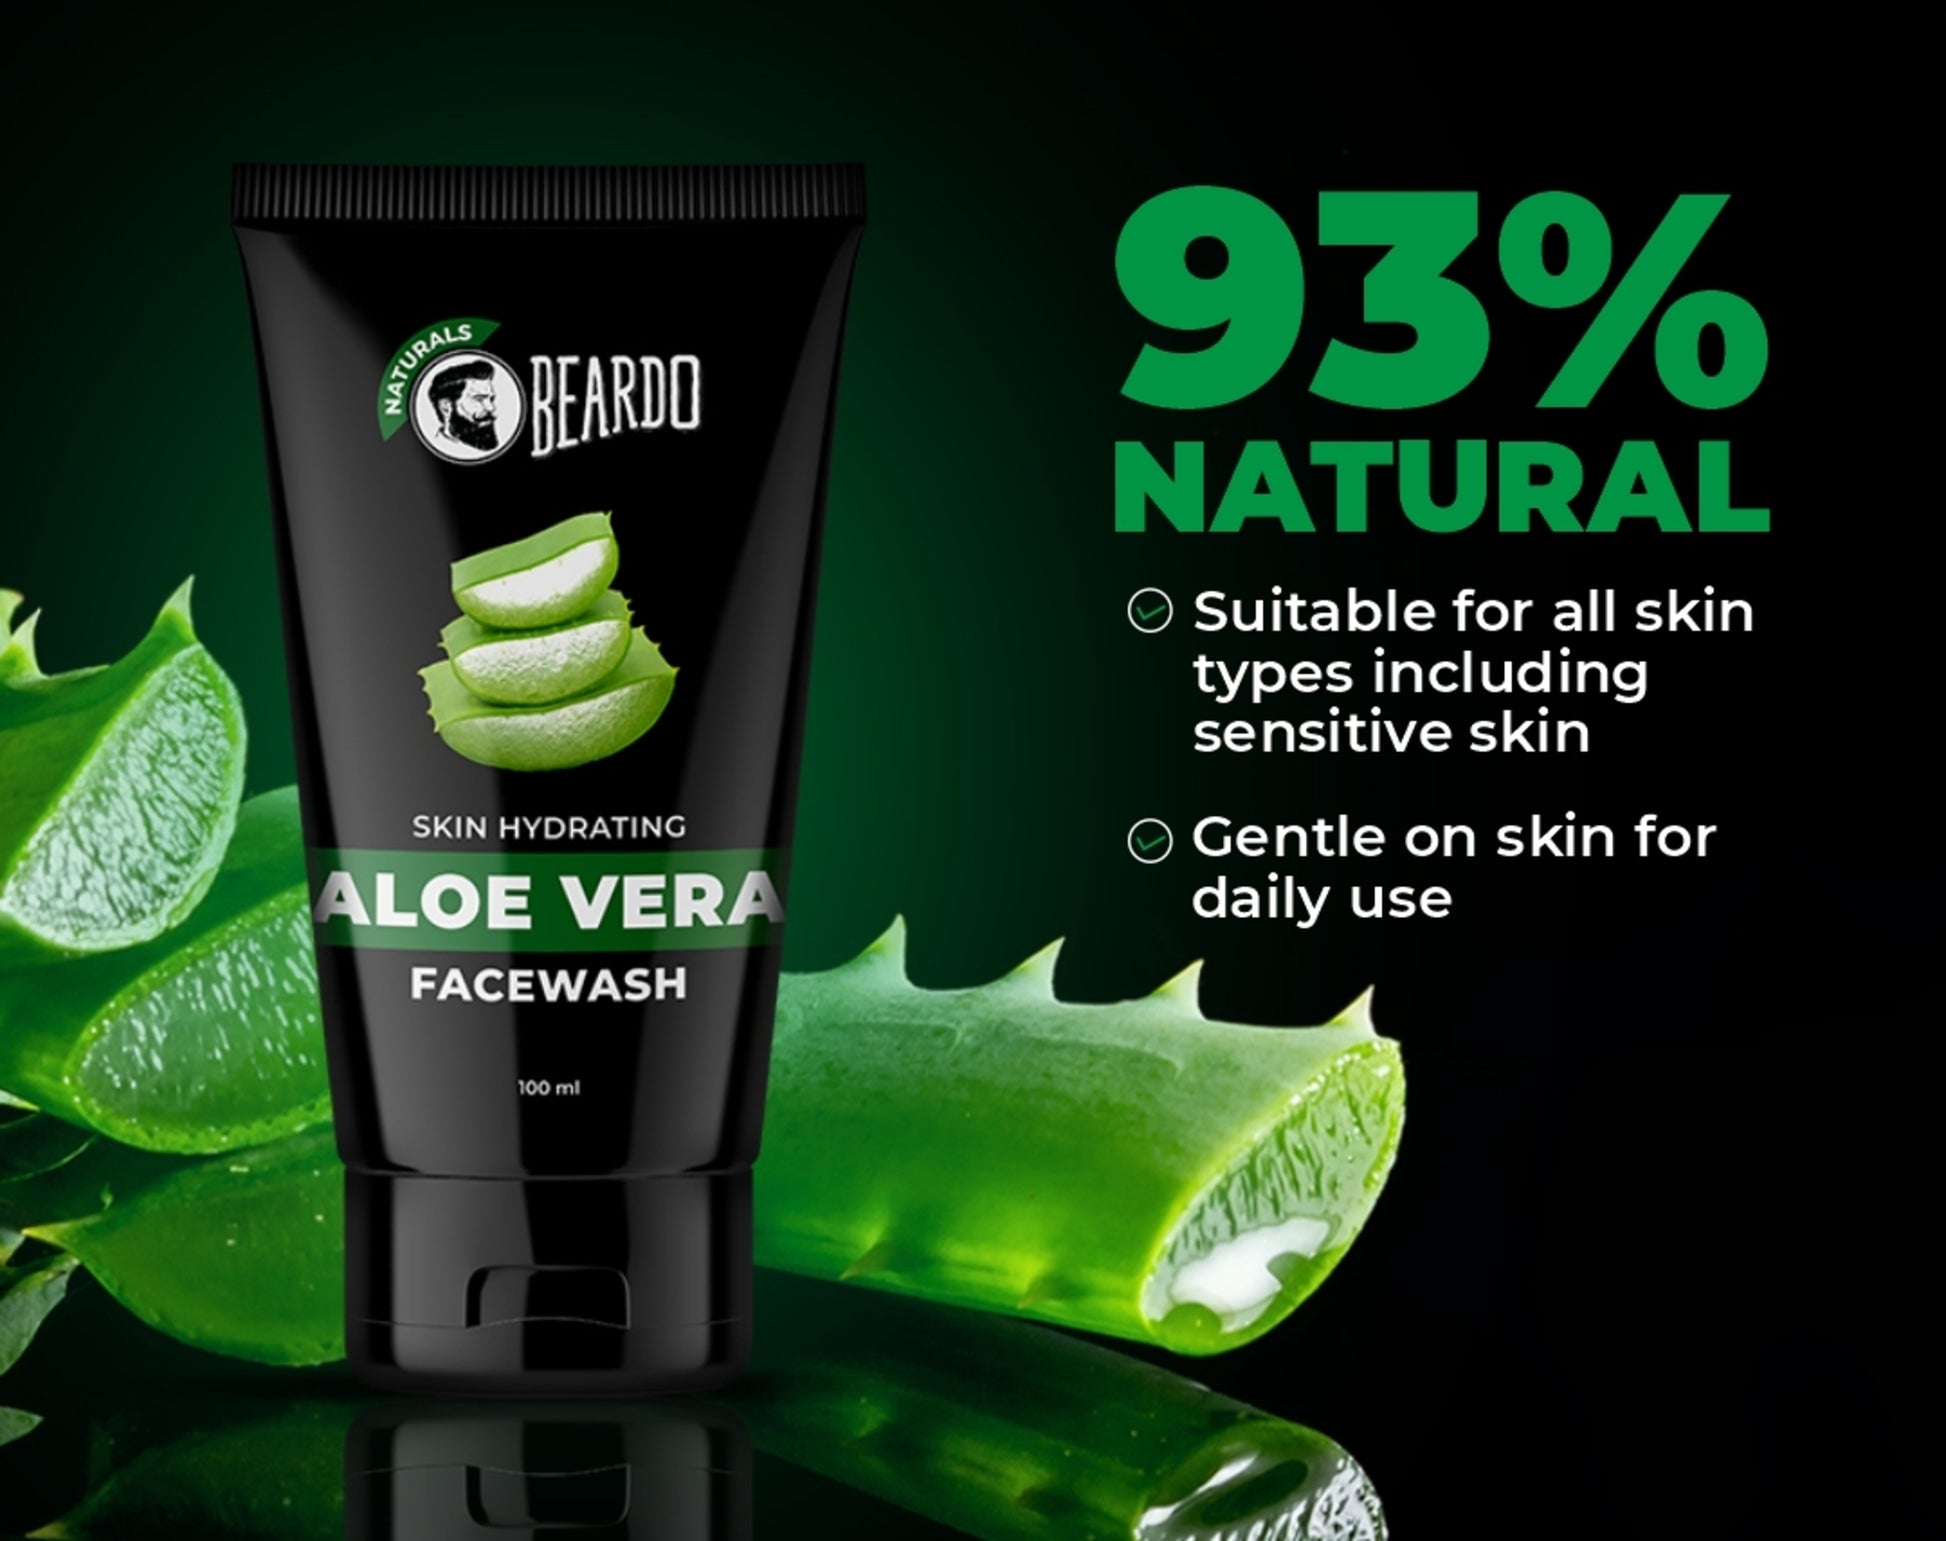 aloe vera benefits, aloe vera properties, gentle face wash, all skin types